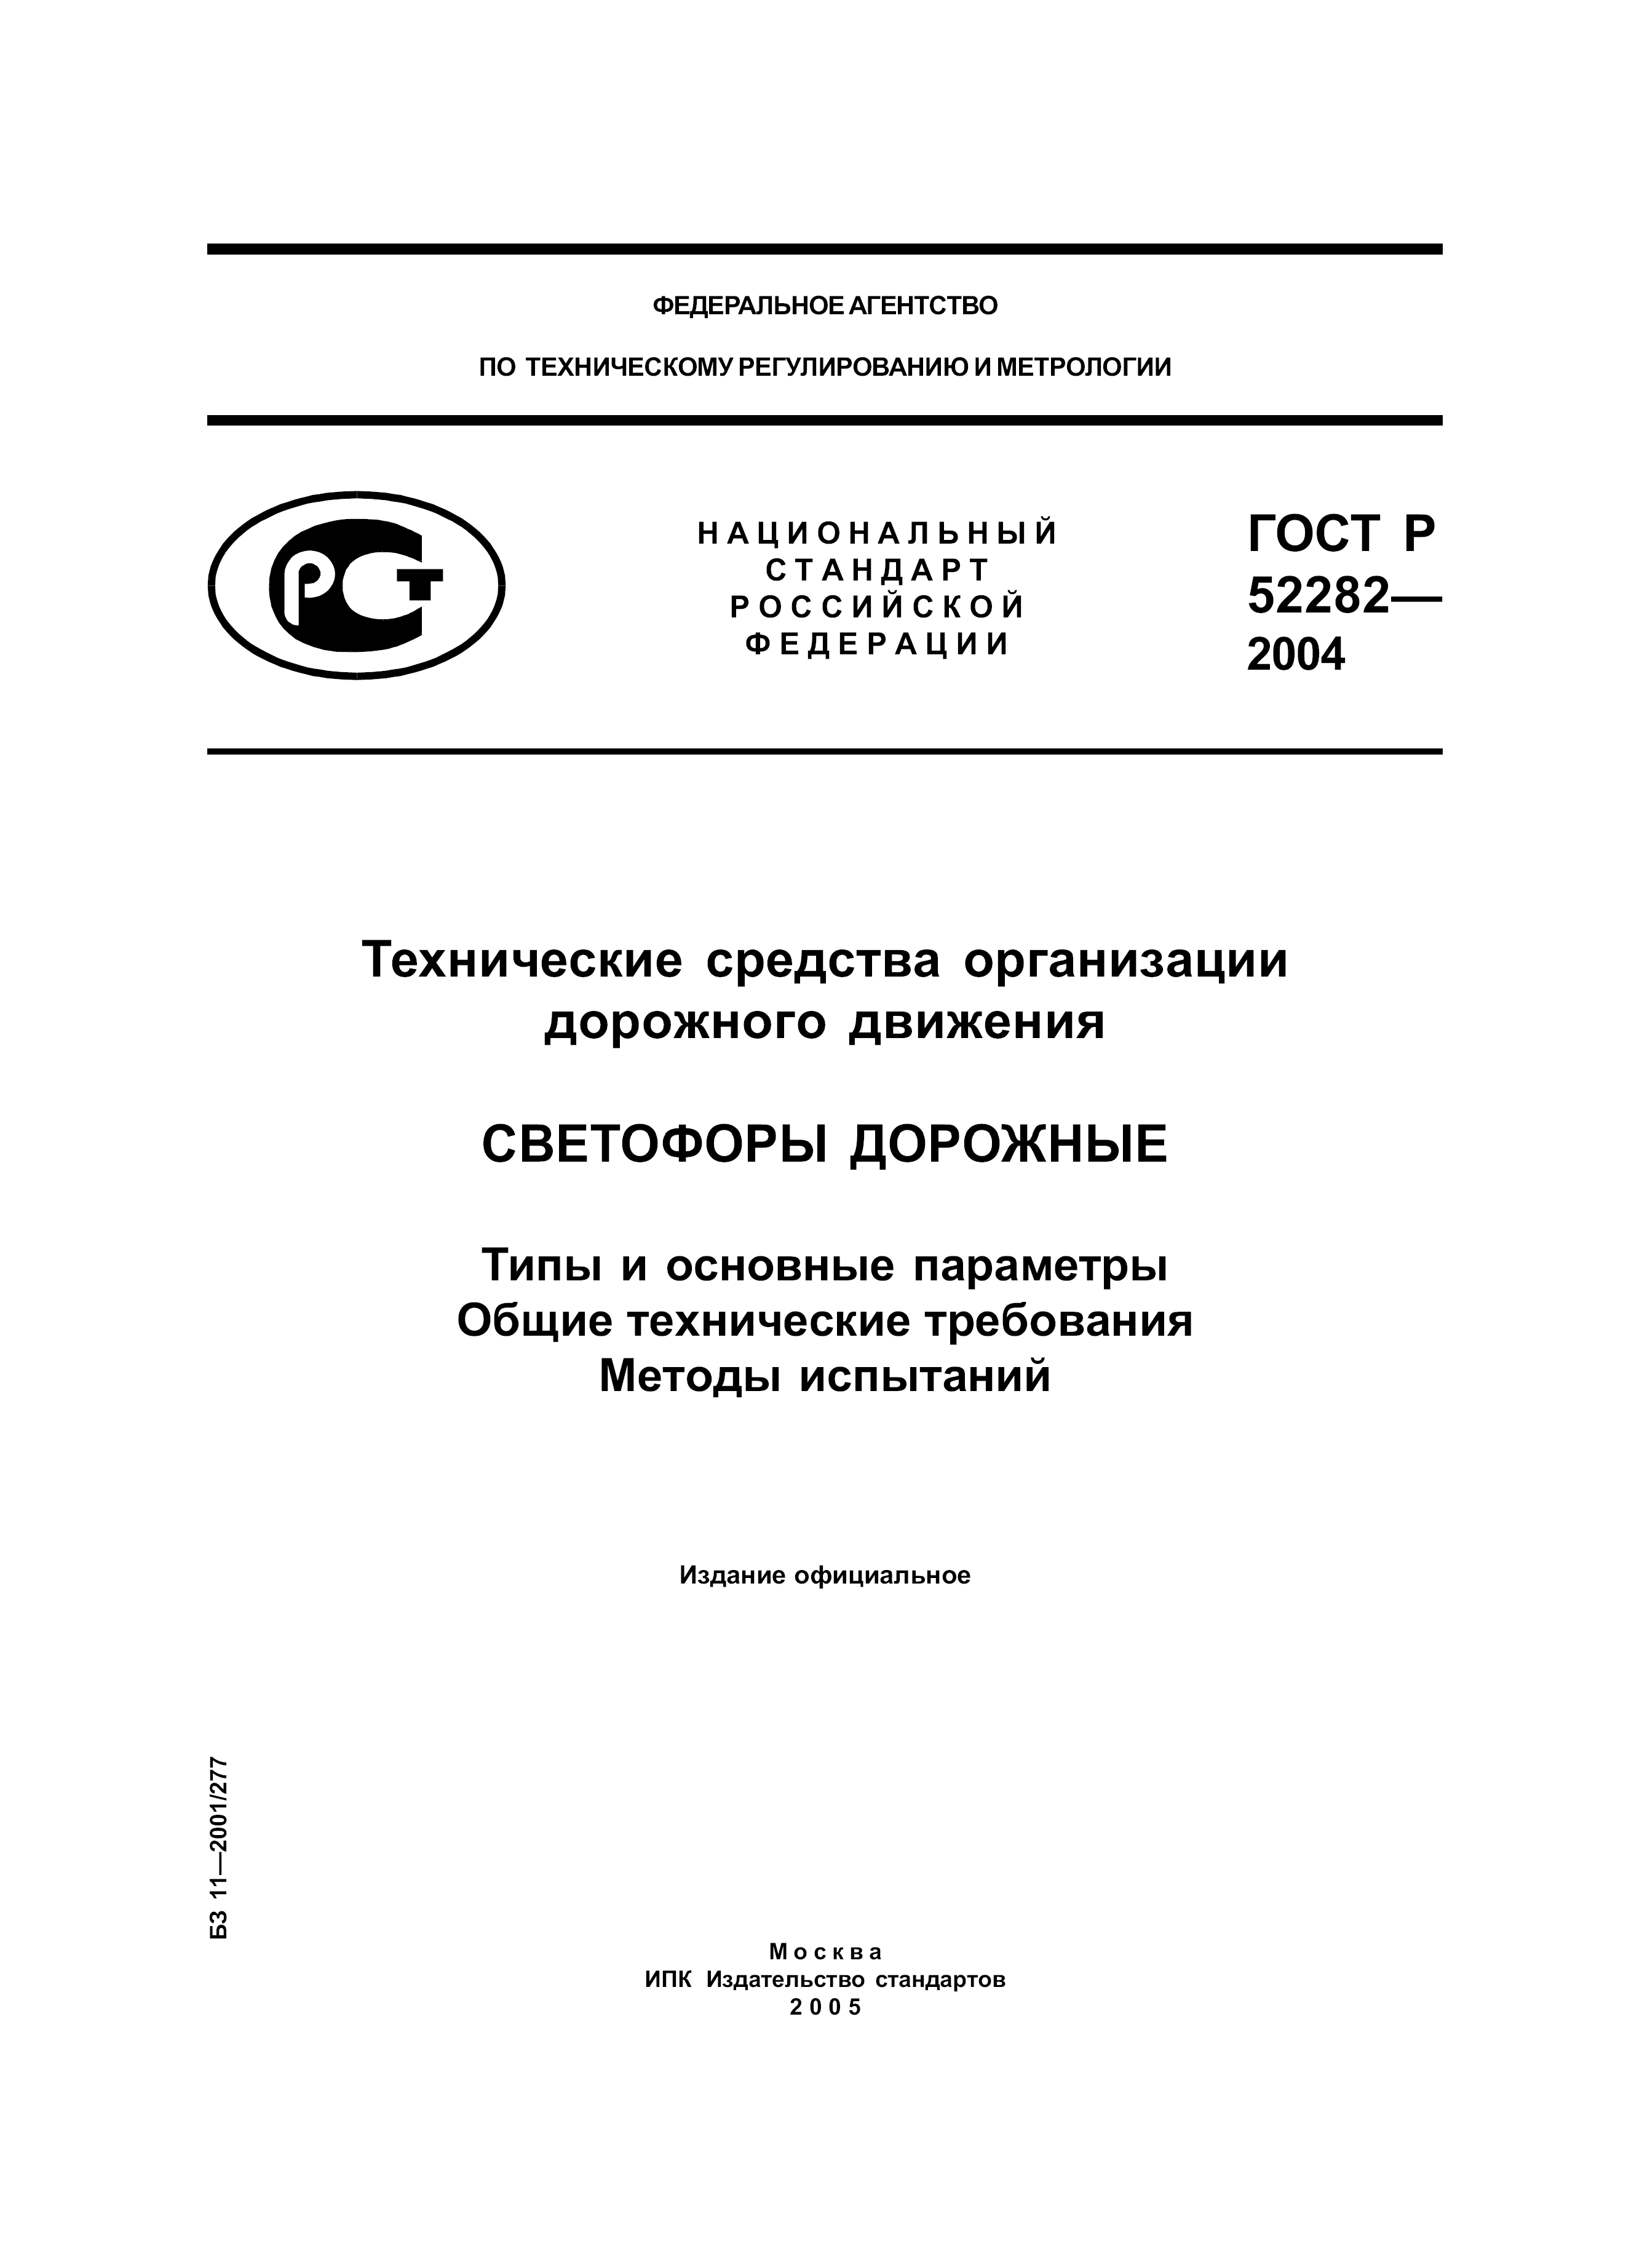 ГОСТ Р 52282-2004